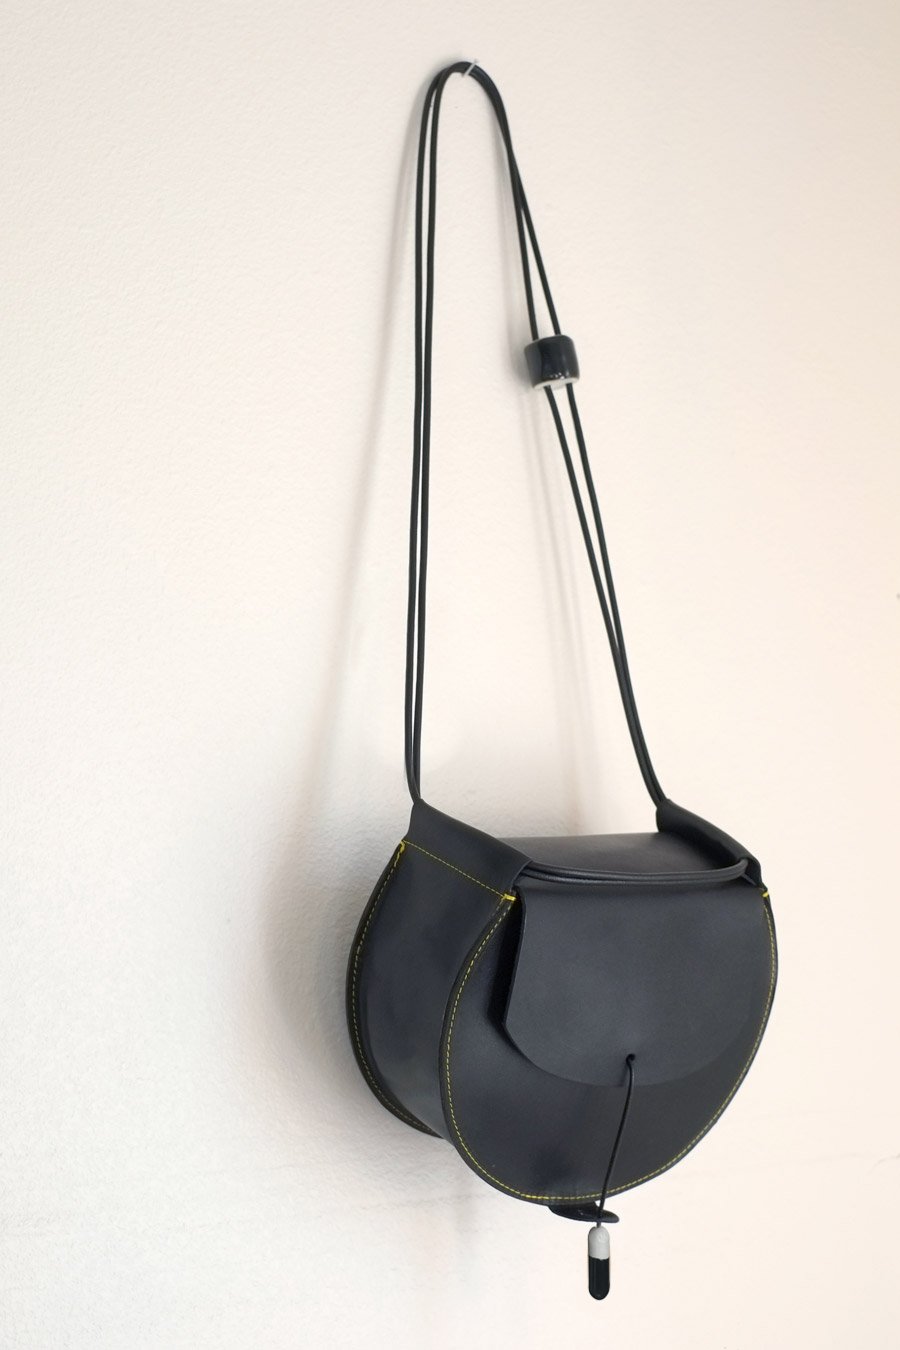 Image of black drum bag